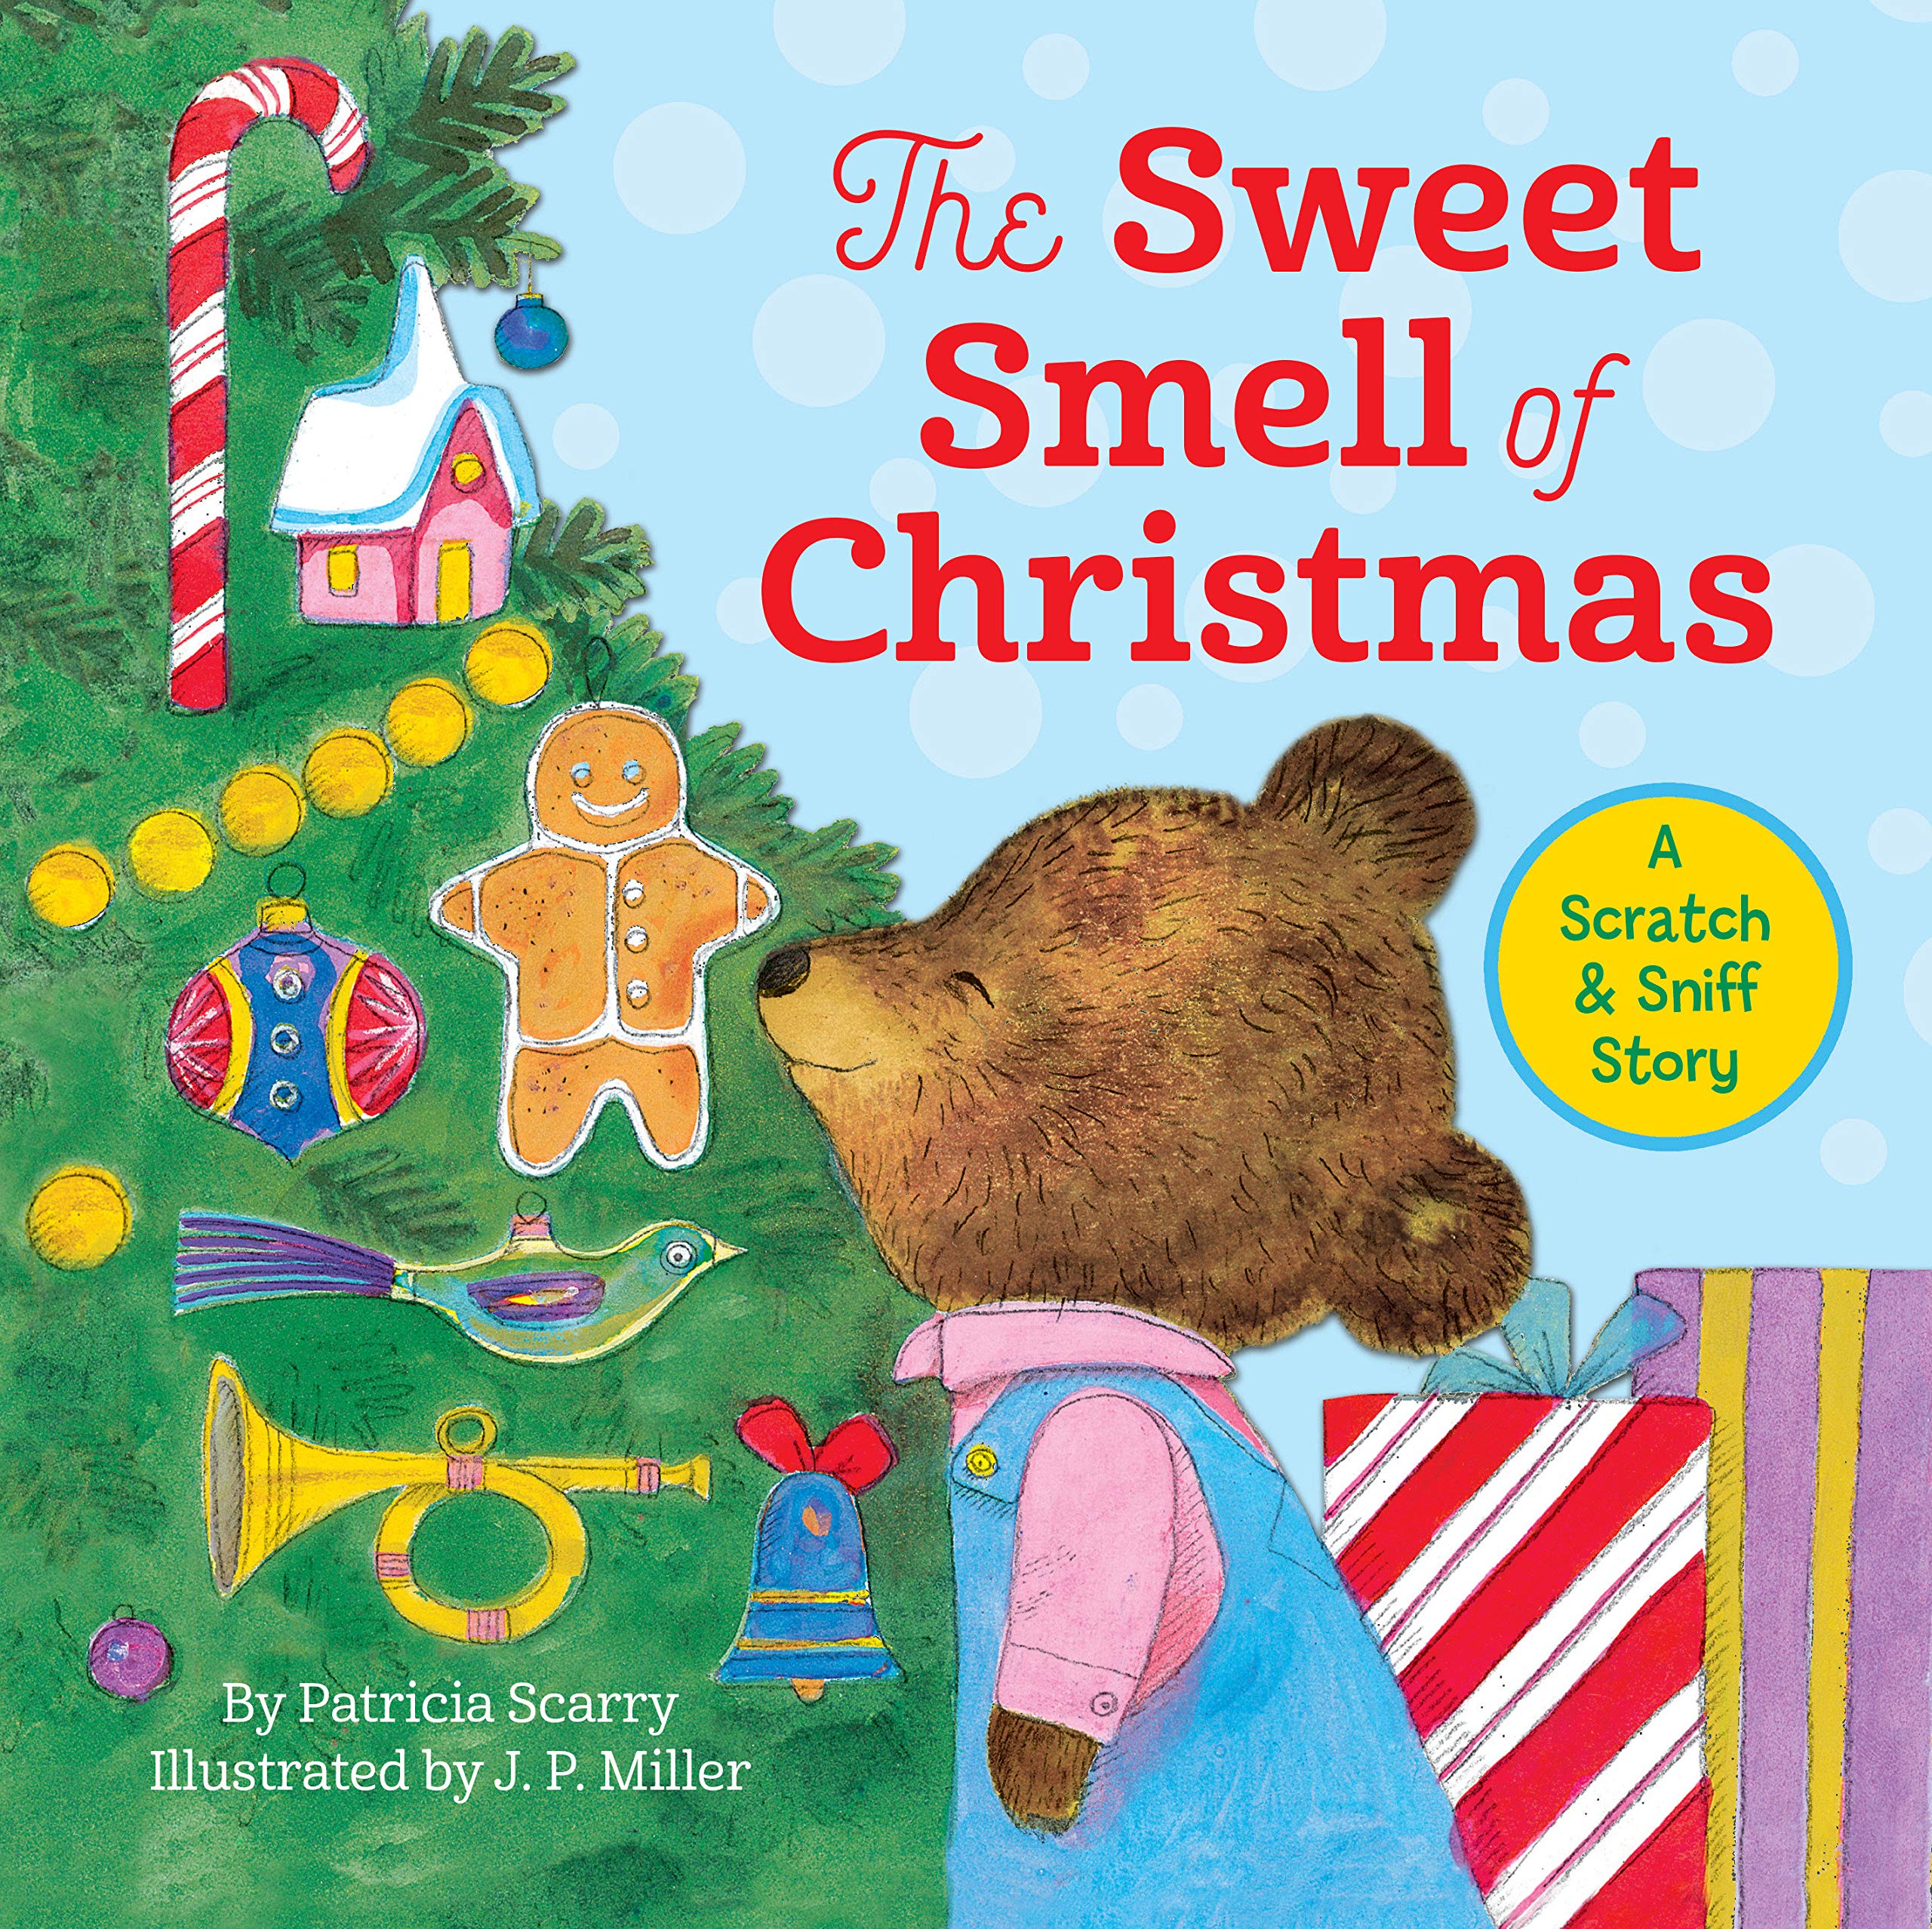 our-favorite-christmas-books-for-kids-debora-mary-blog